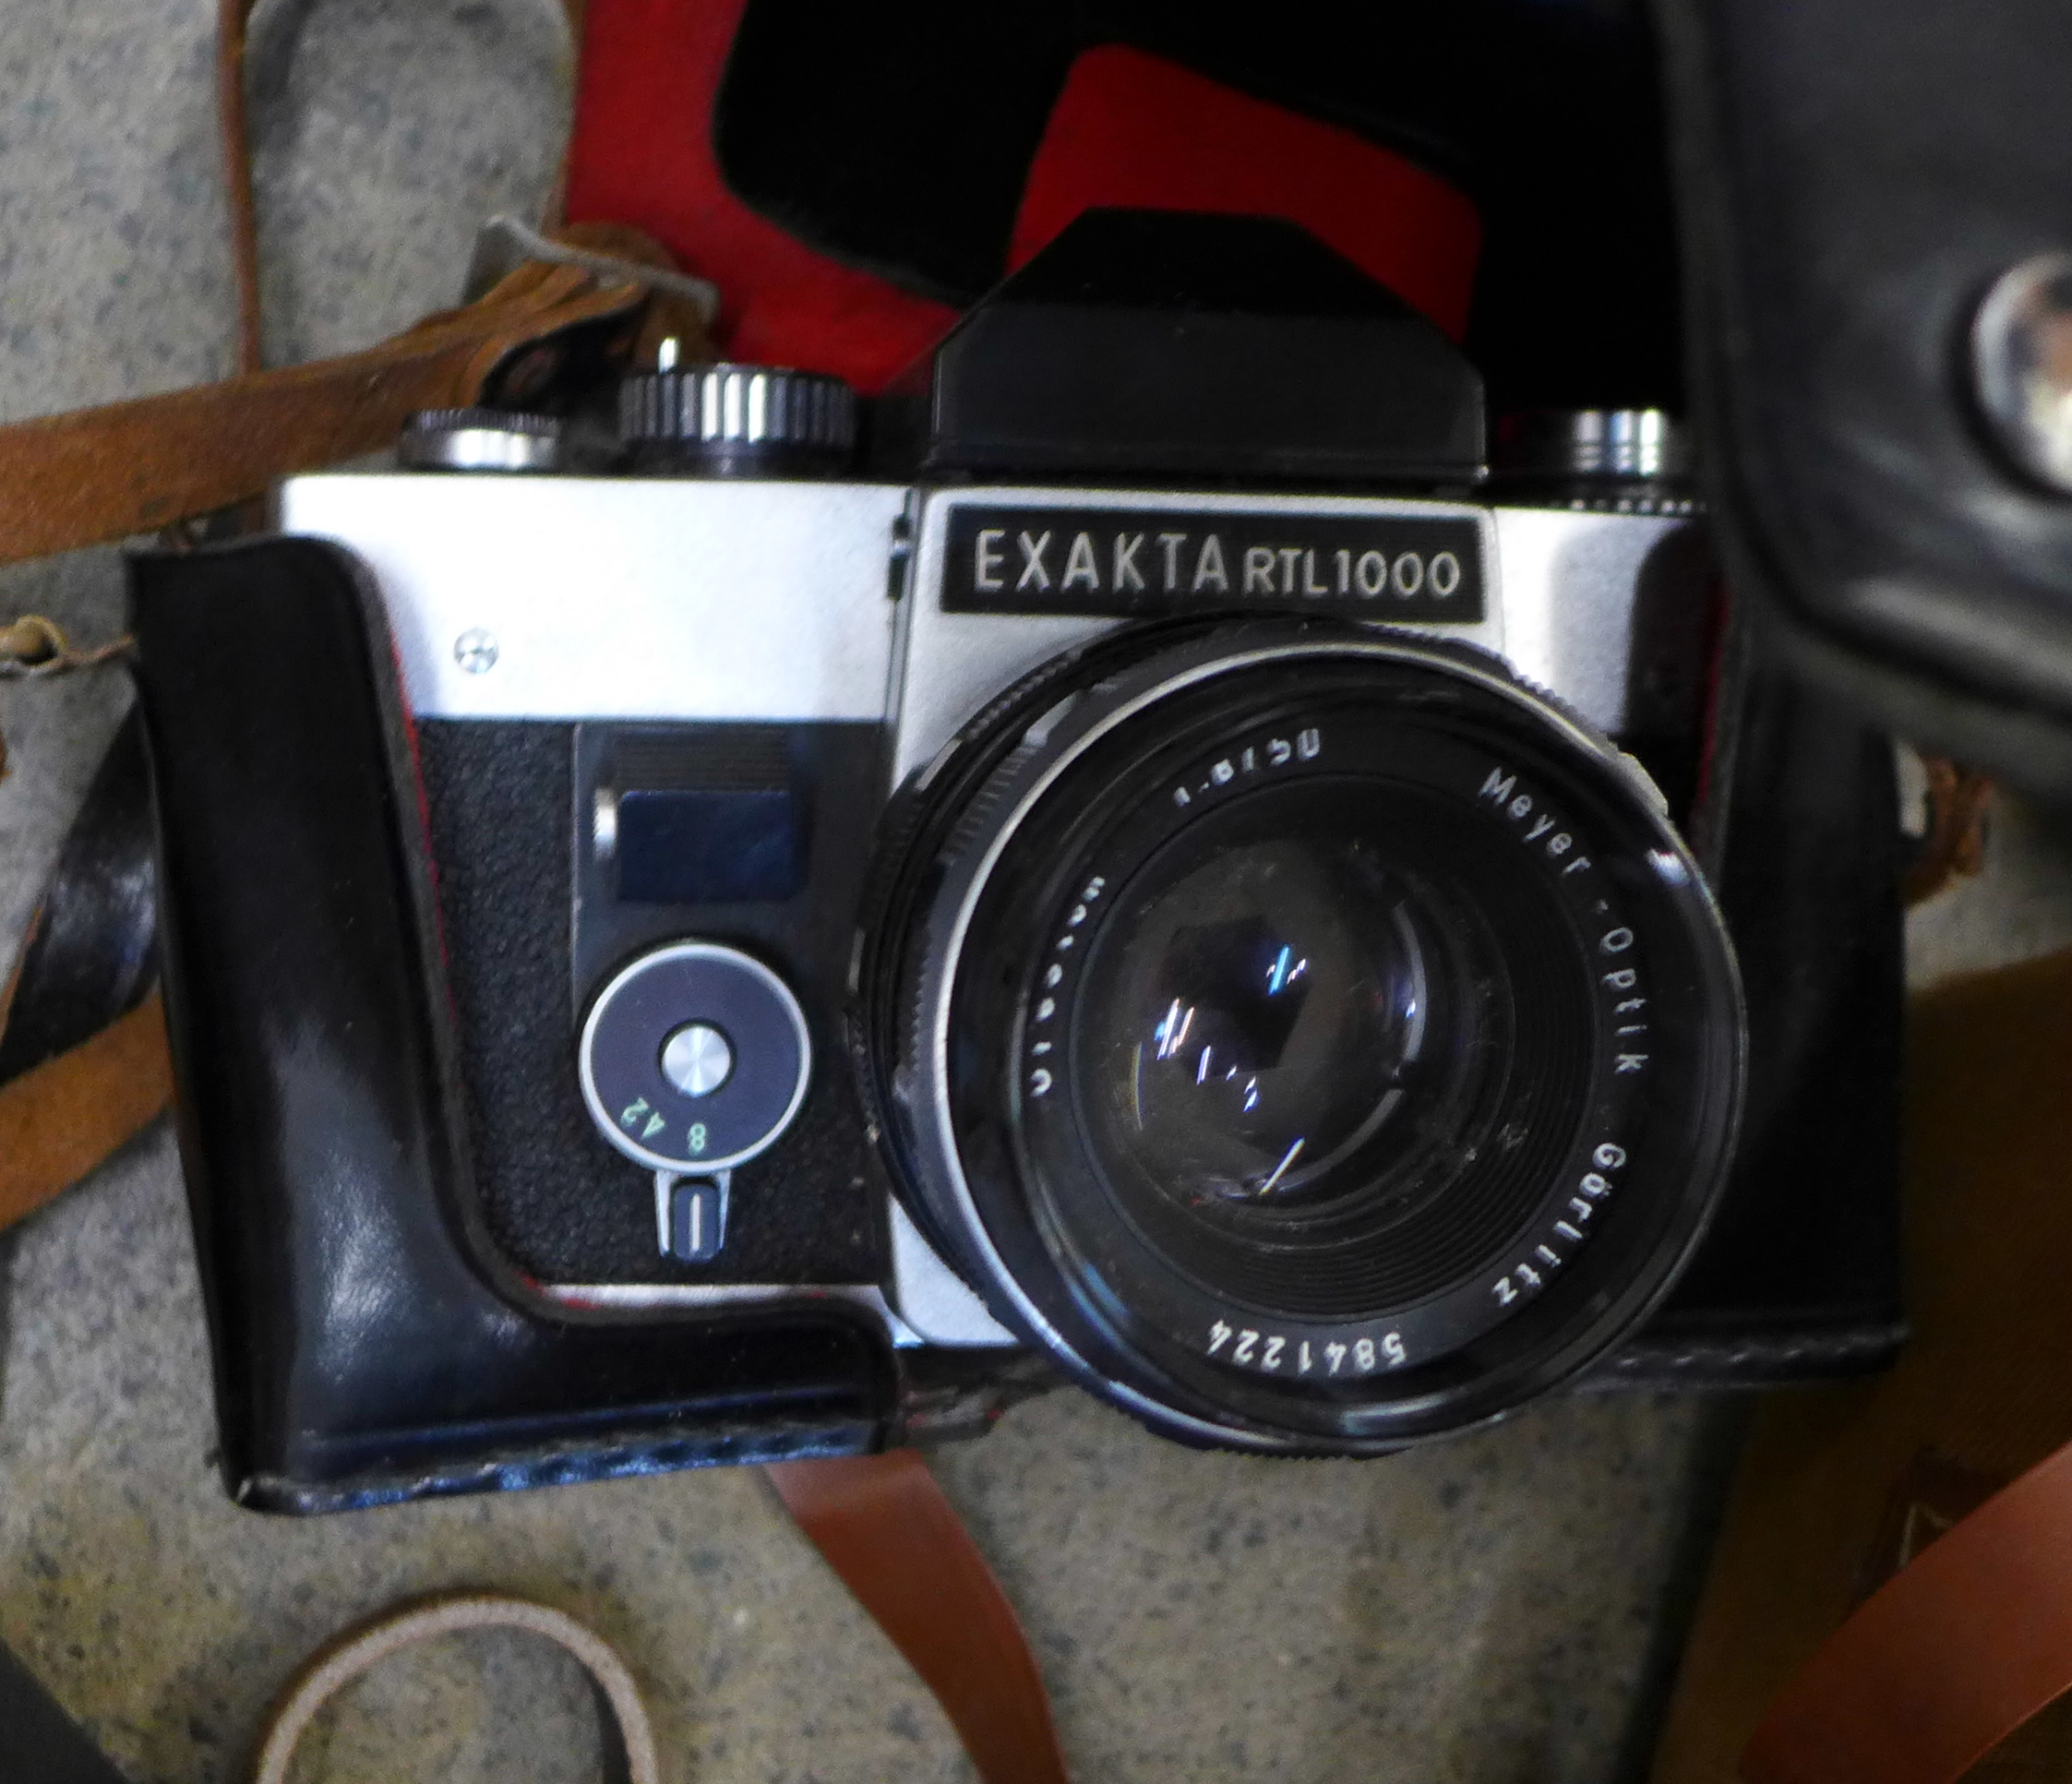 A collection of cameras including Exakta, Bella, Polaroid, Zenit, etc. - Image 3 of 4